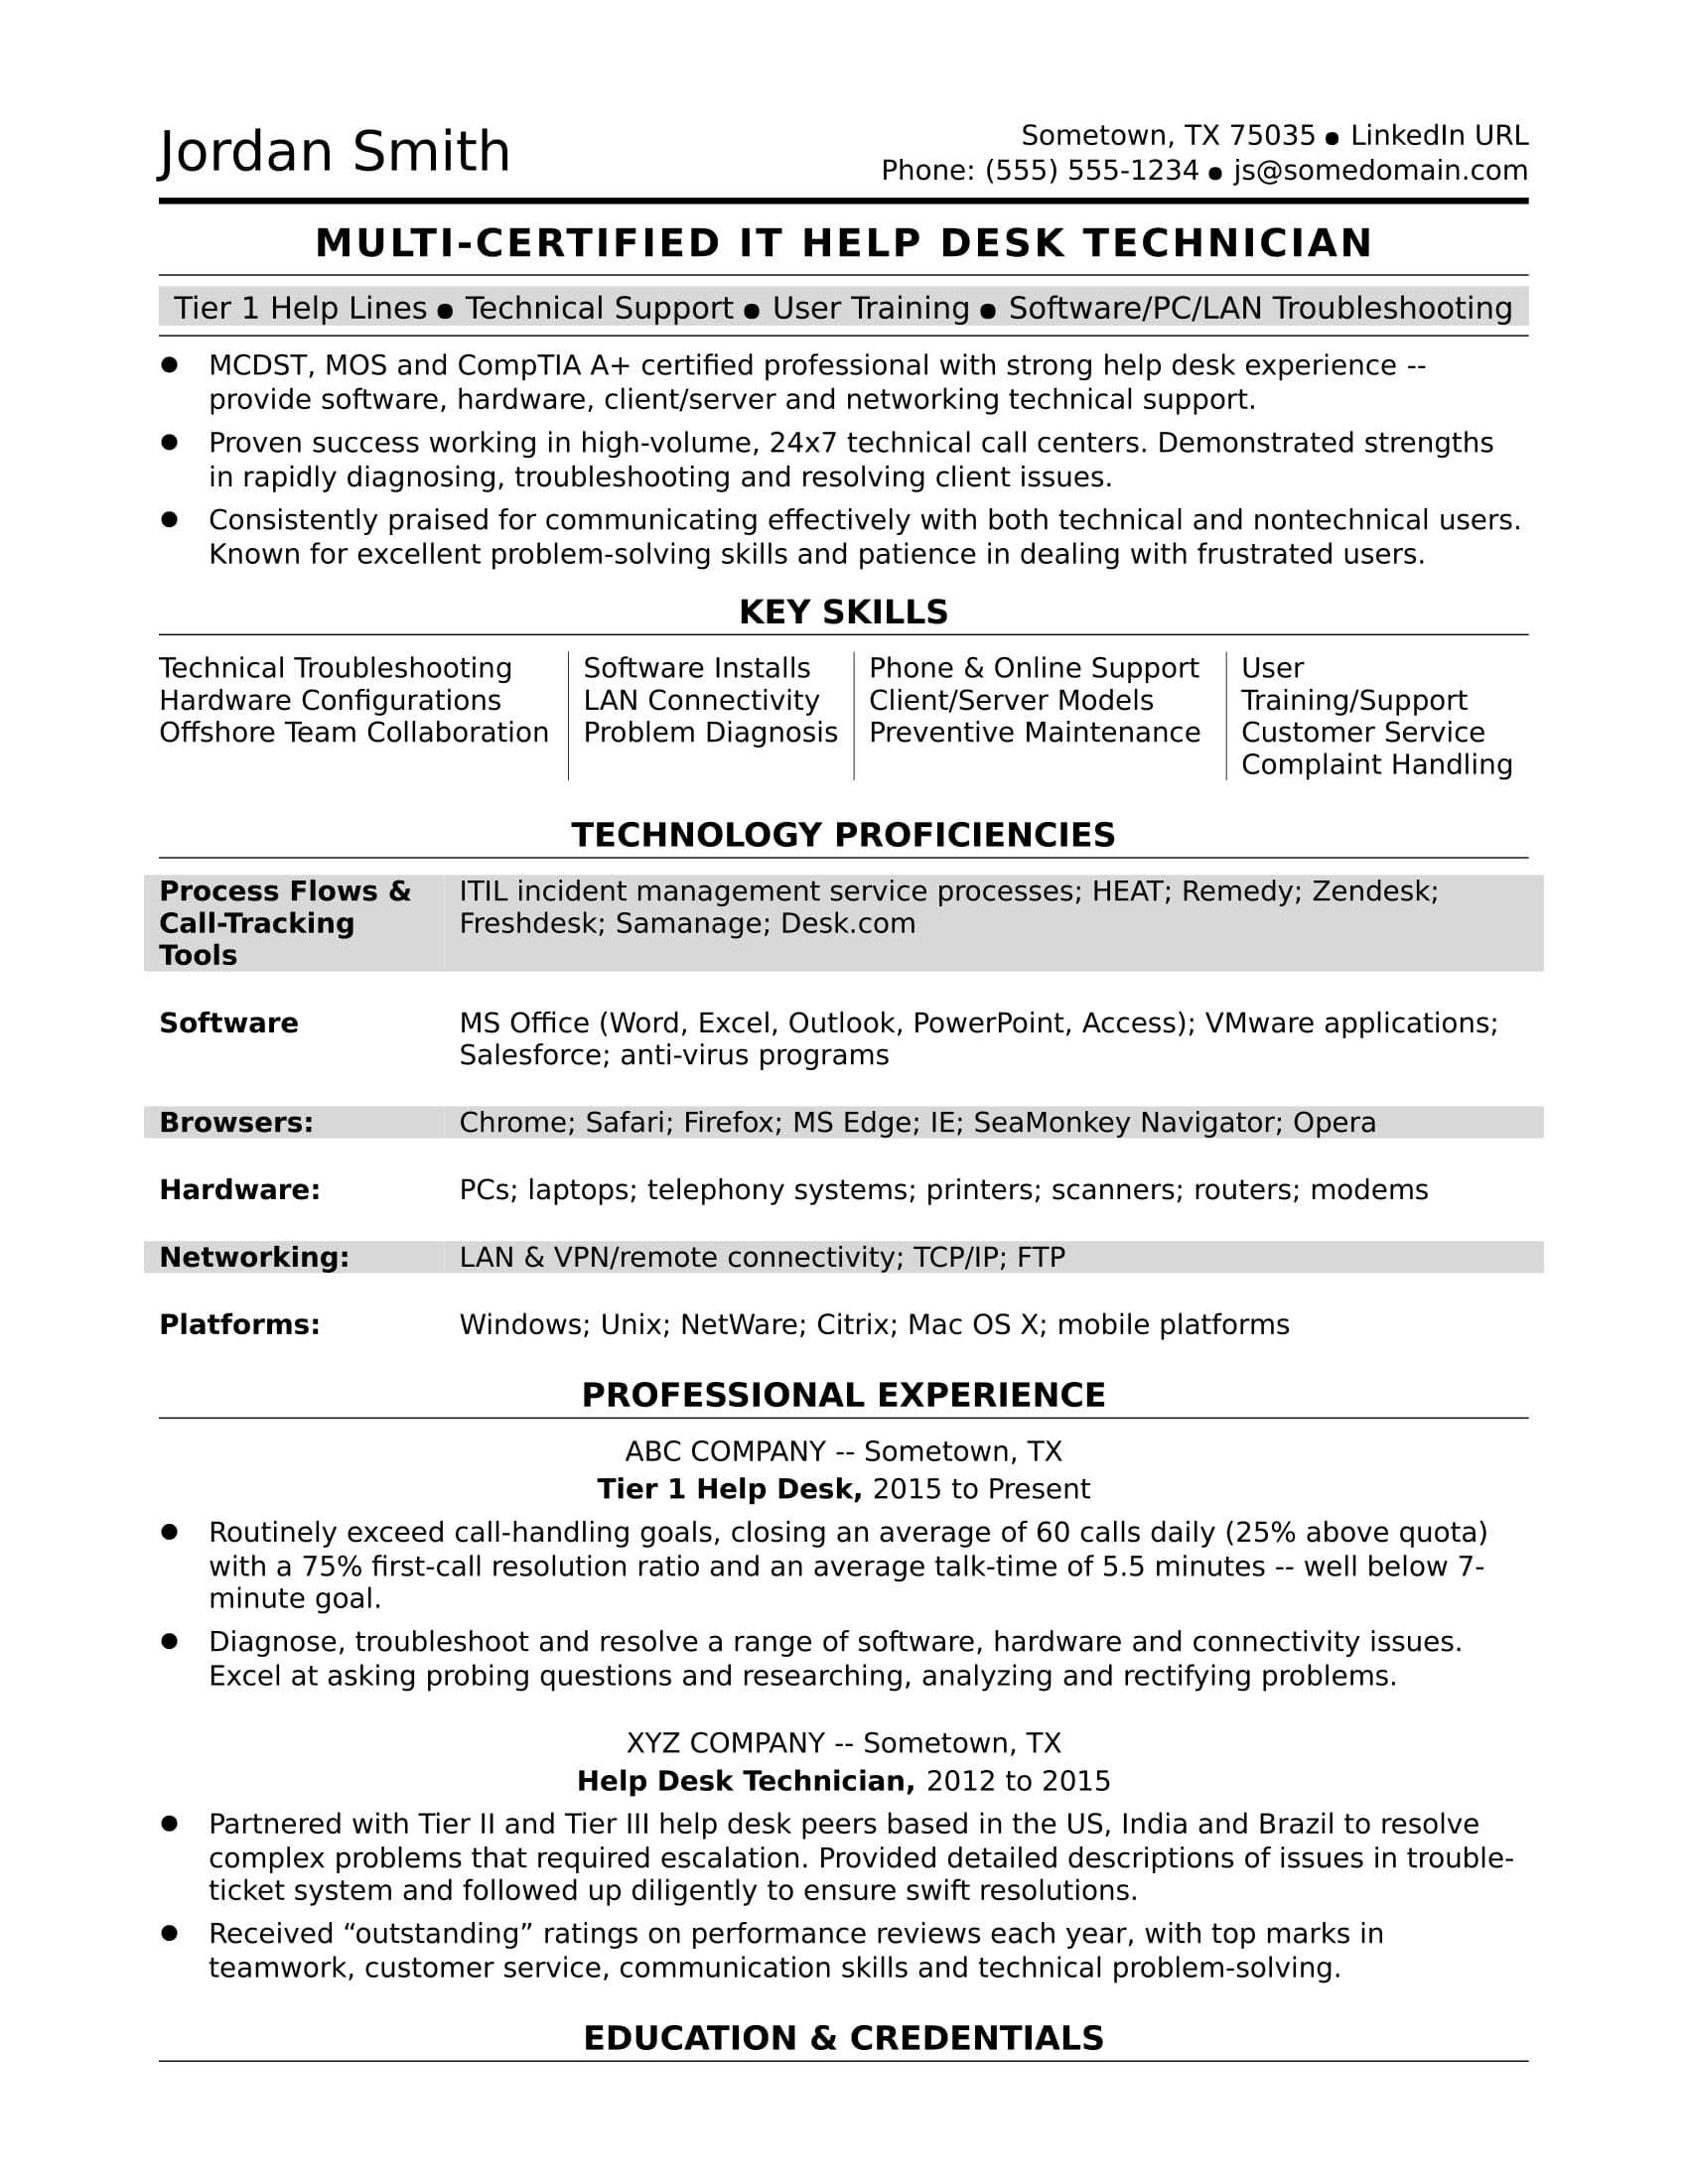 Information Technology Sample Resume area Of Strength Sample Resume for A Midlevel It Help Desk Professional Monster.com